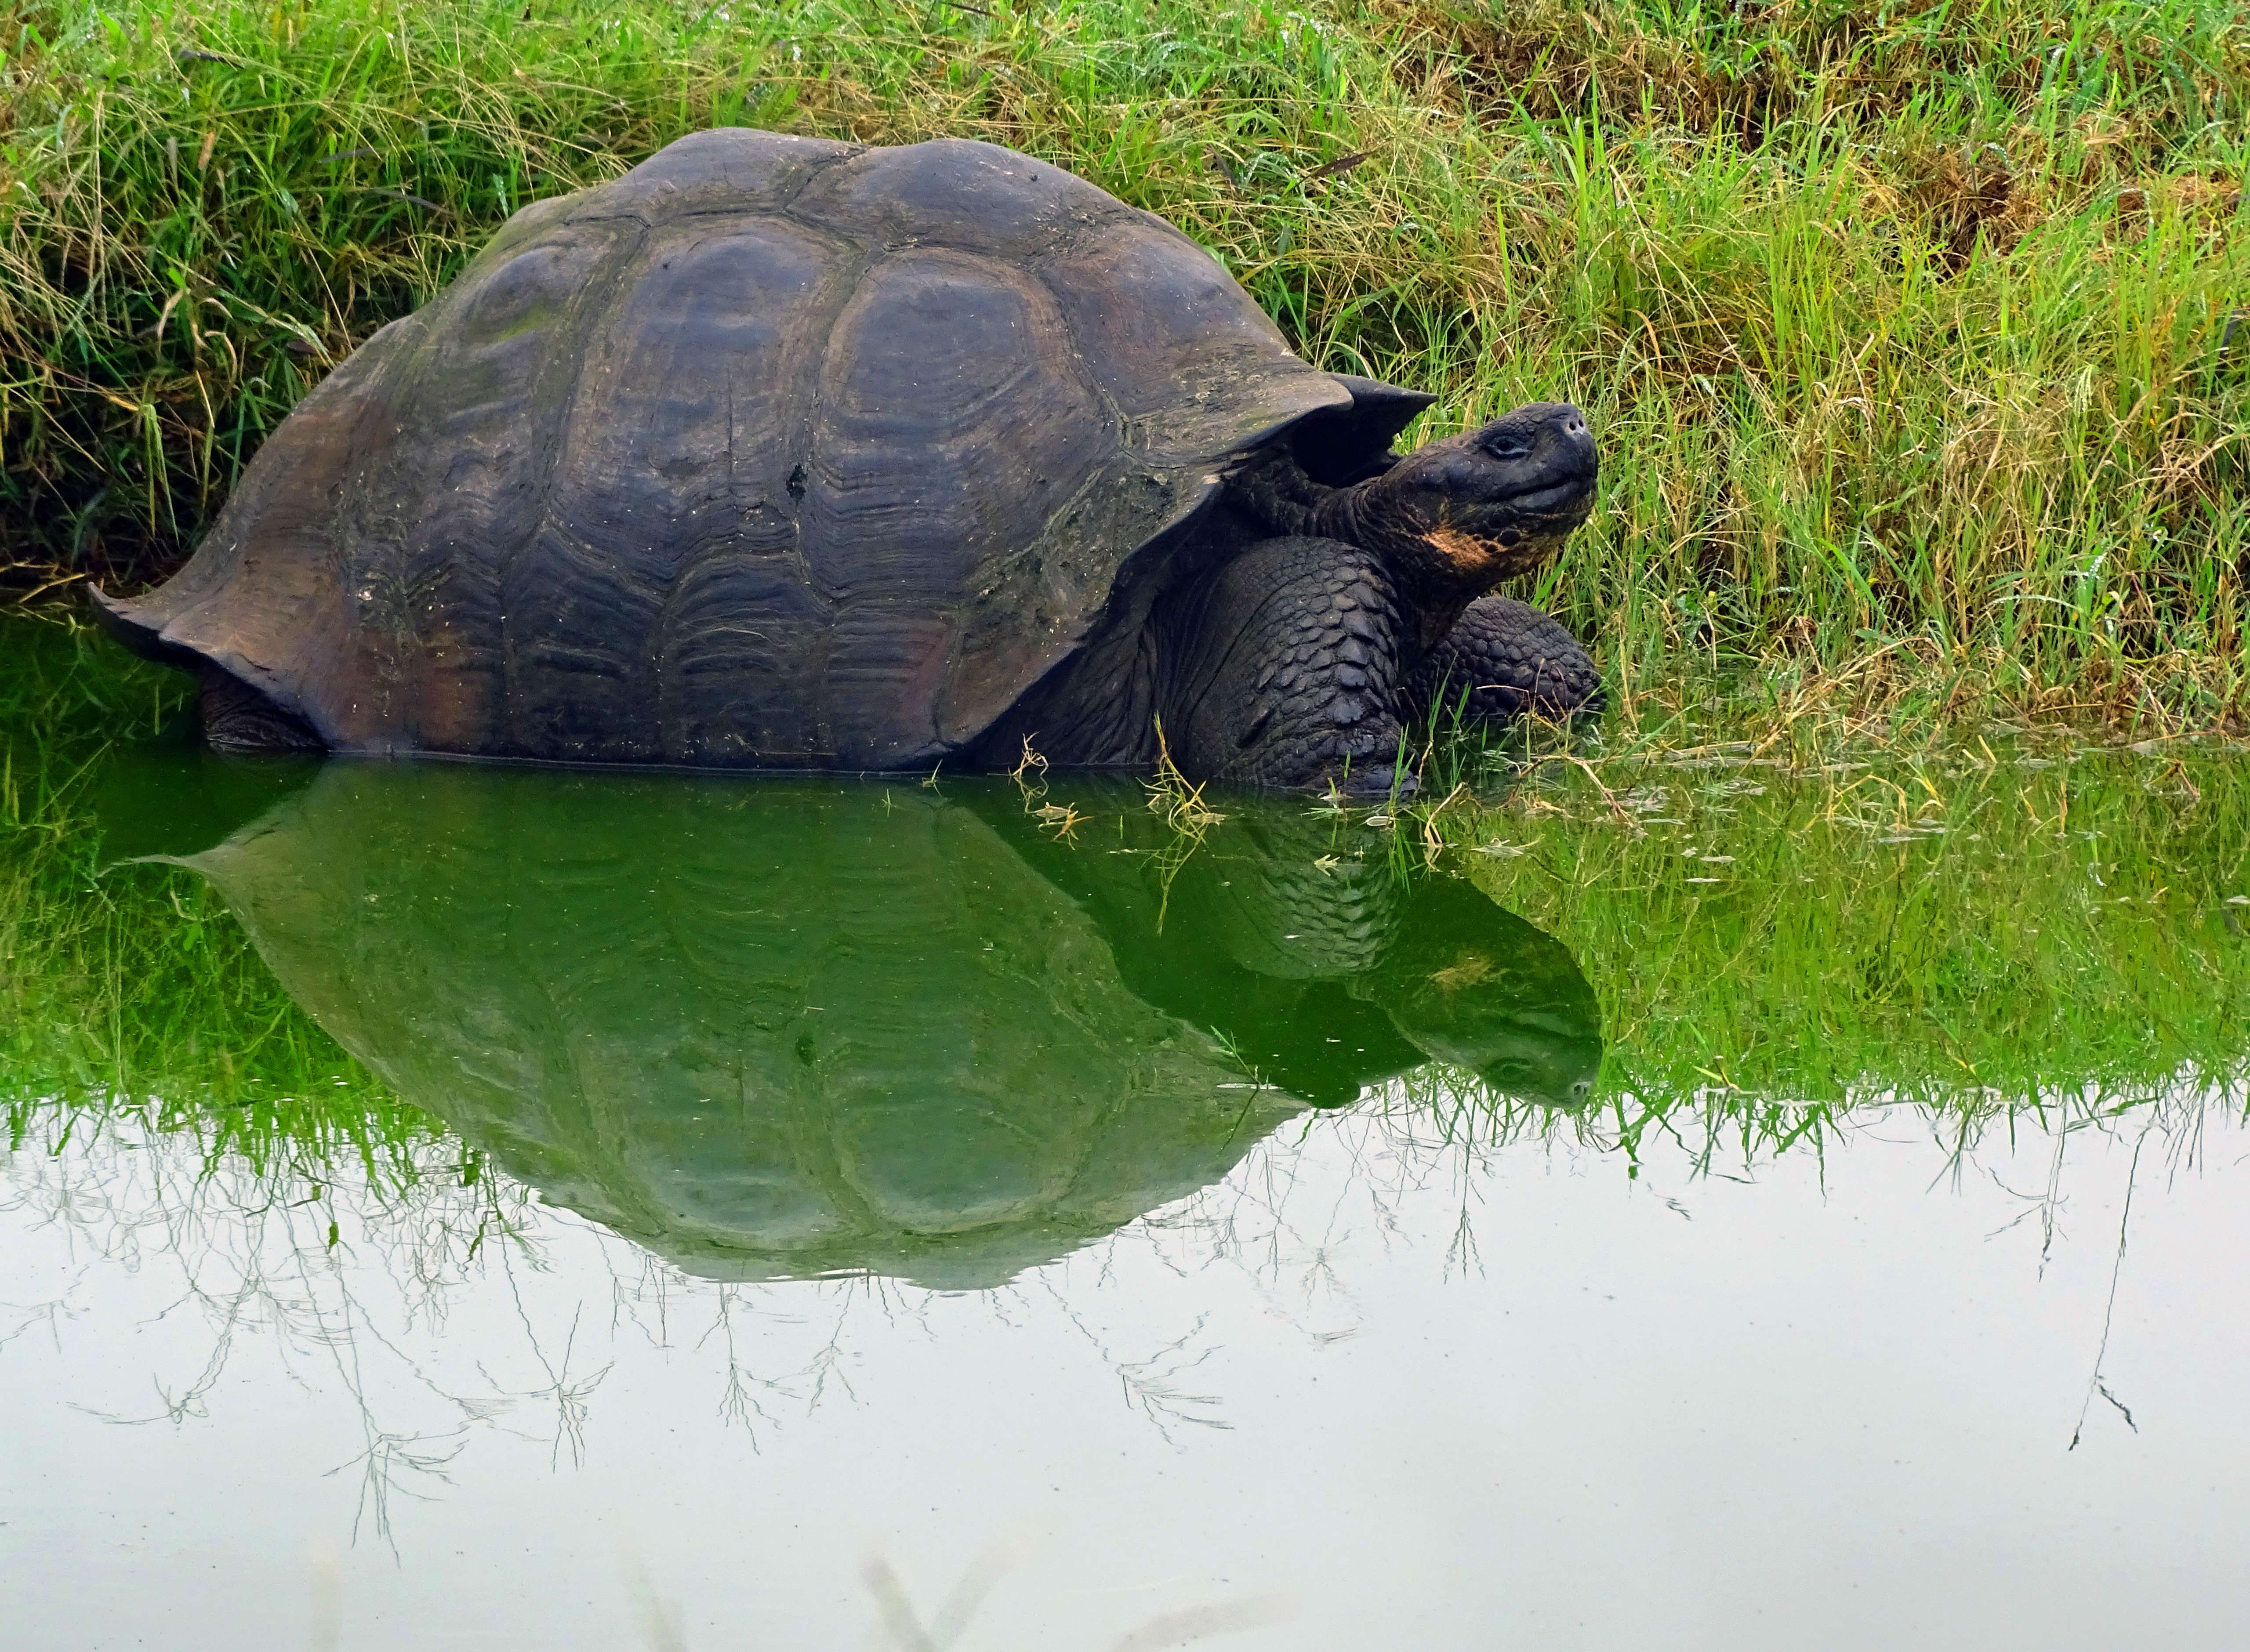 Reflecting on the Galapagos: giant tortoise